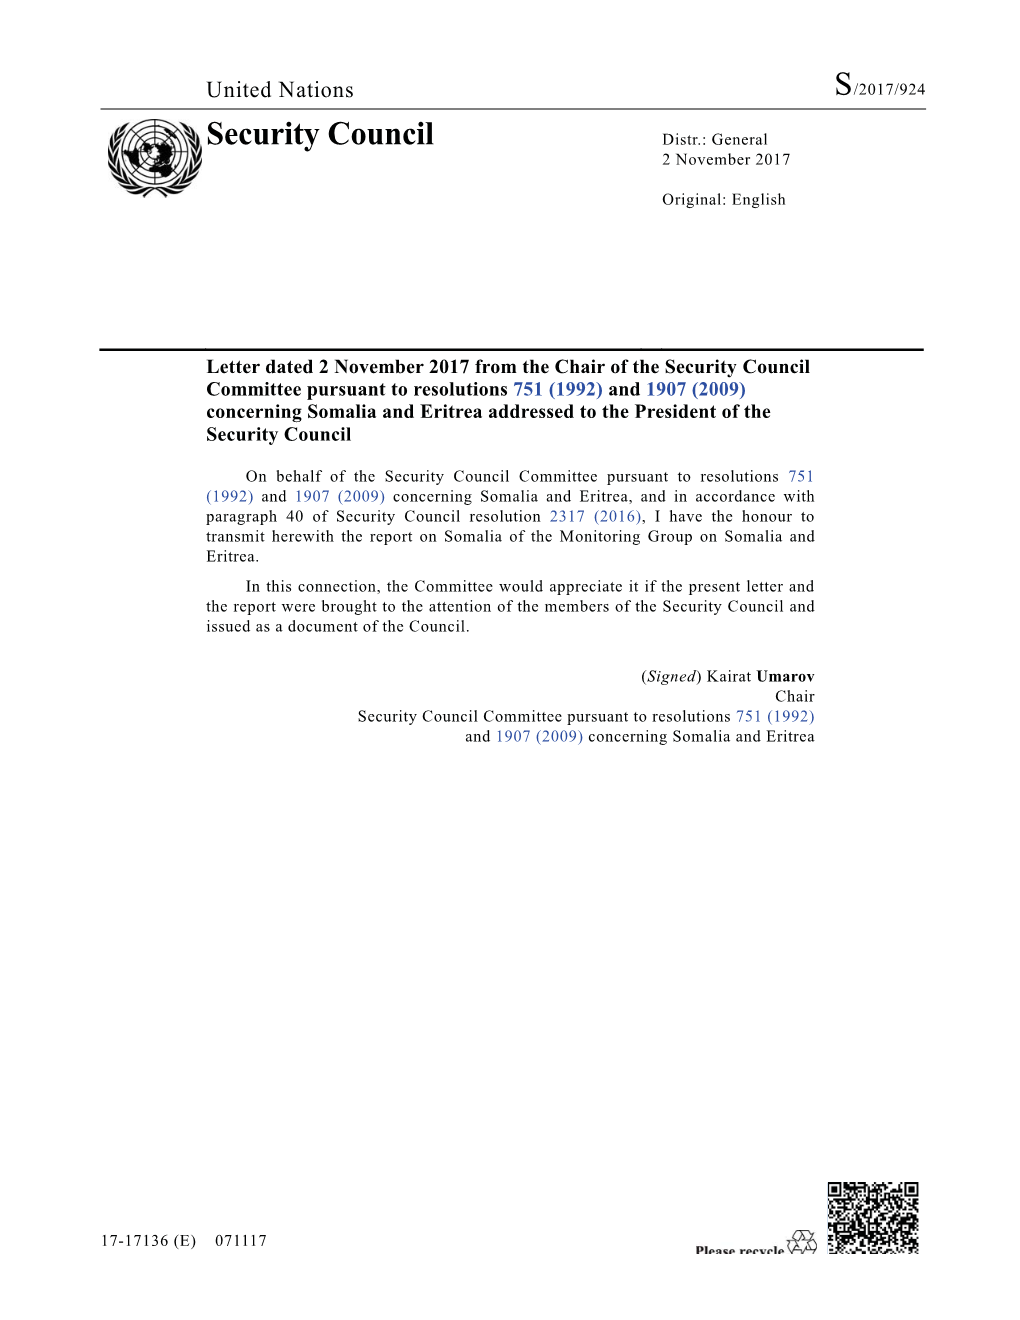 Security Council Distr.: General 2 November 2017